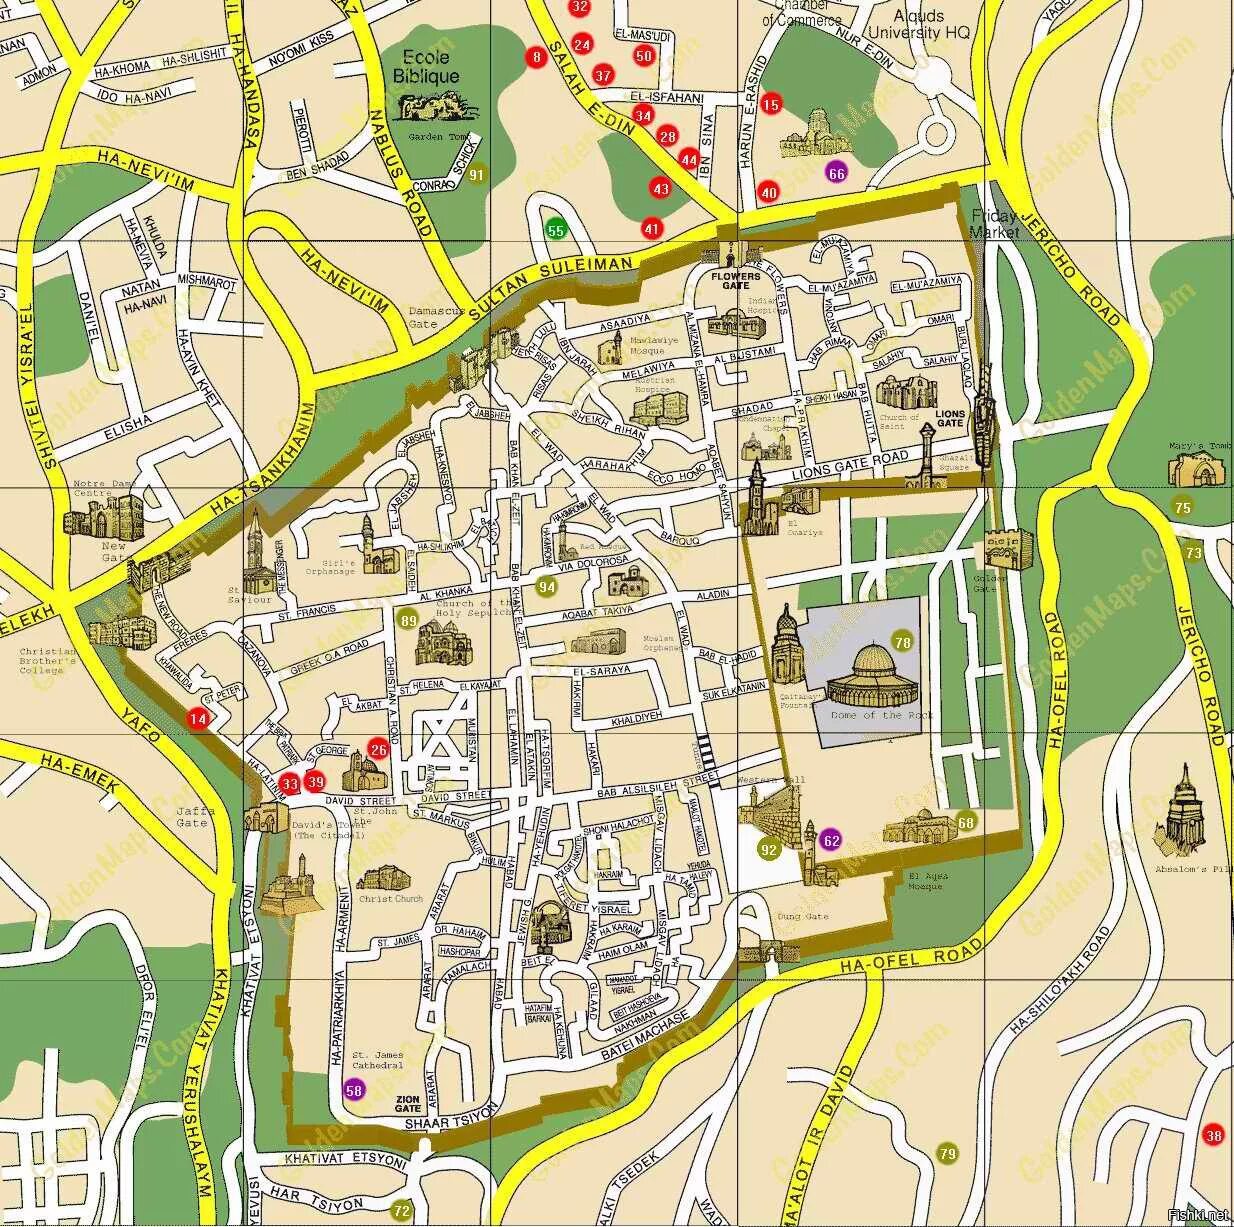 Где на карте город иерусалим. Иерусалим старый город карта. Иерусалим план города. Карта старого города Иерусалима. План старого города Иерусалима на русском языке.